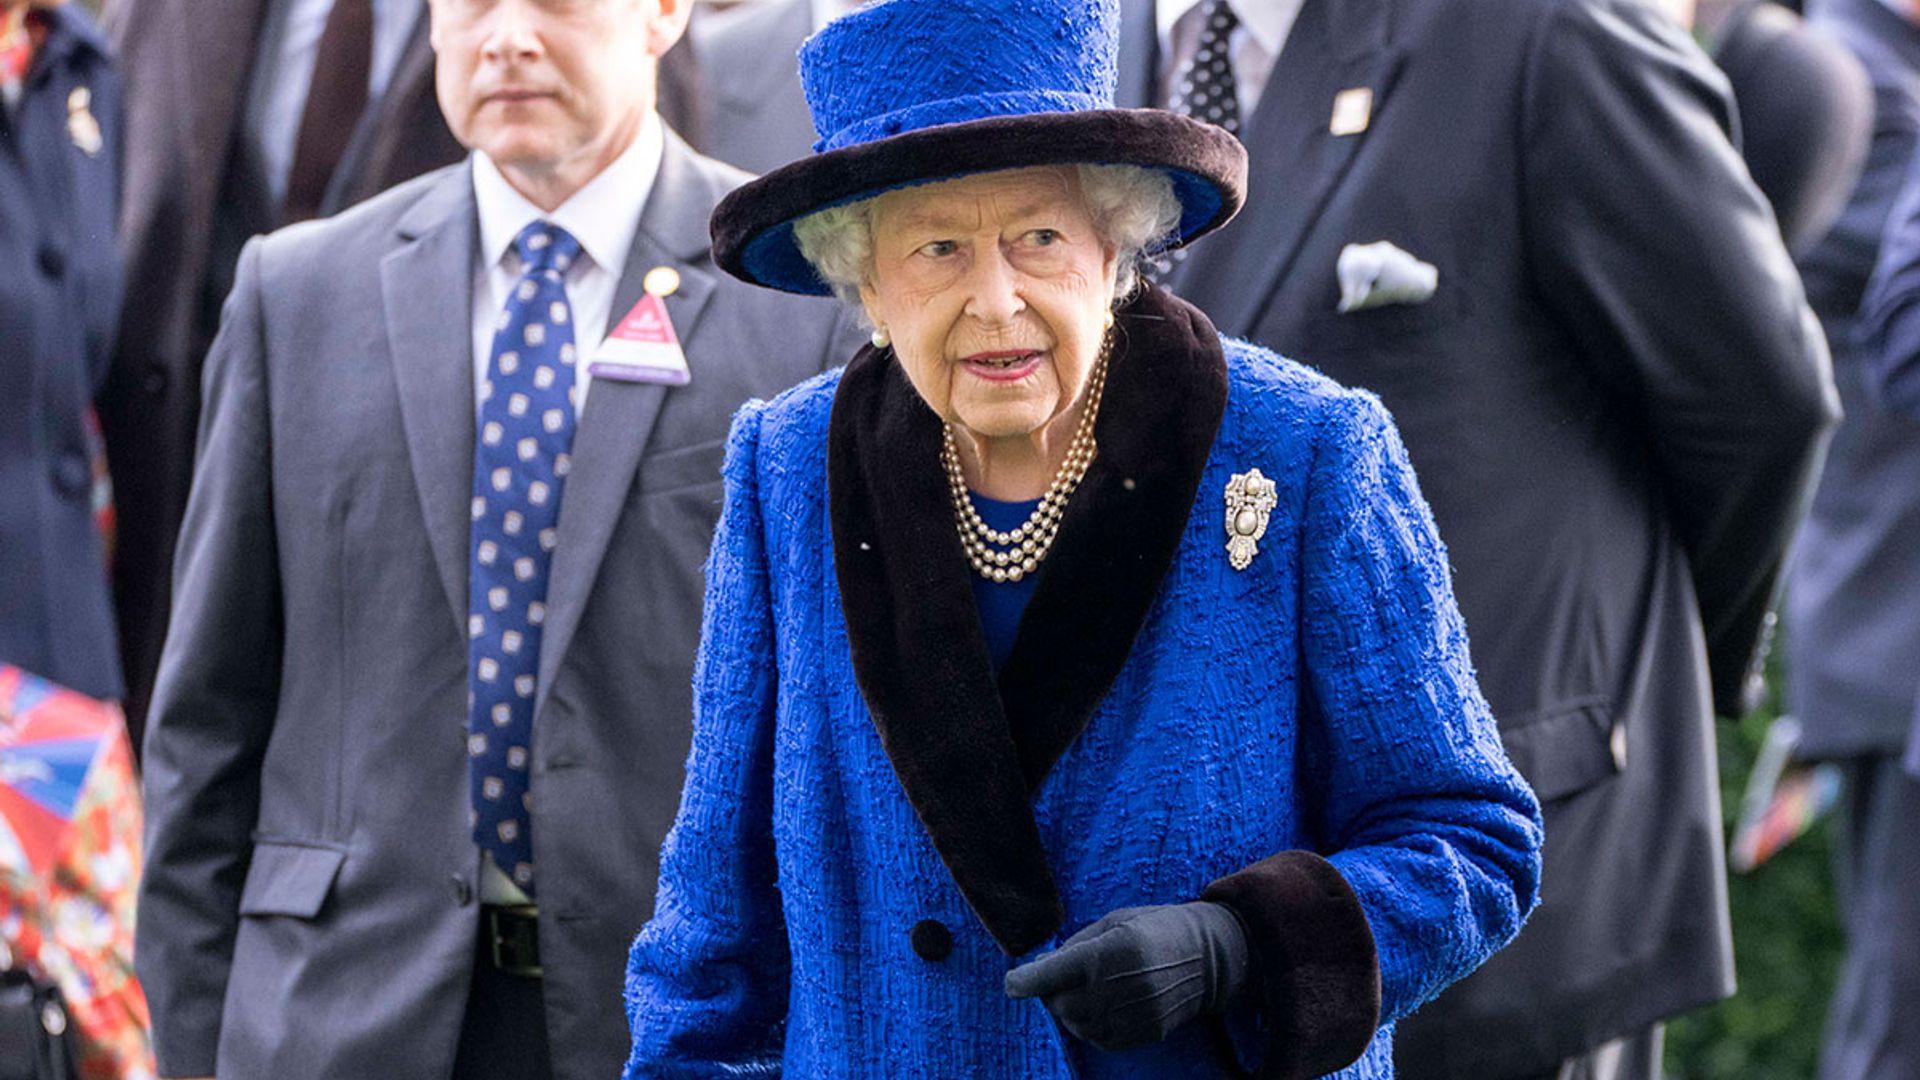 queen northern ireland visit cancelled